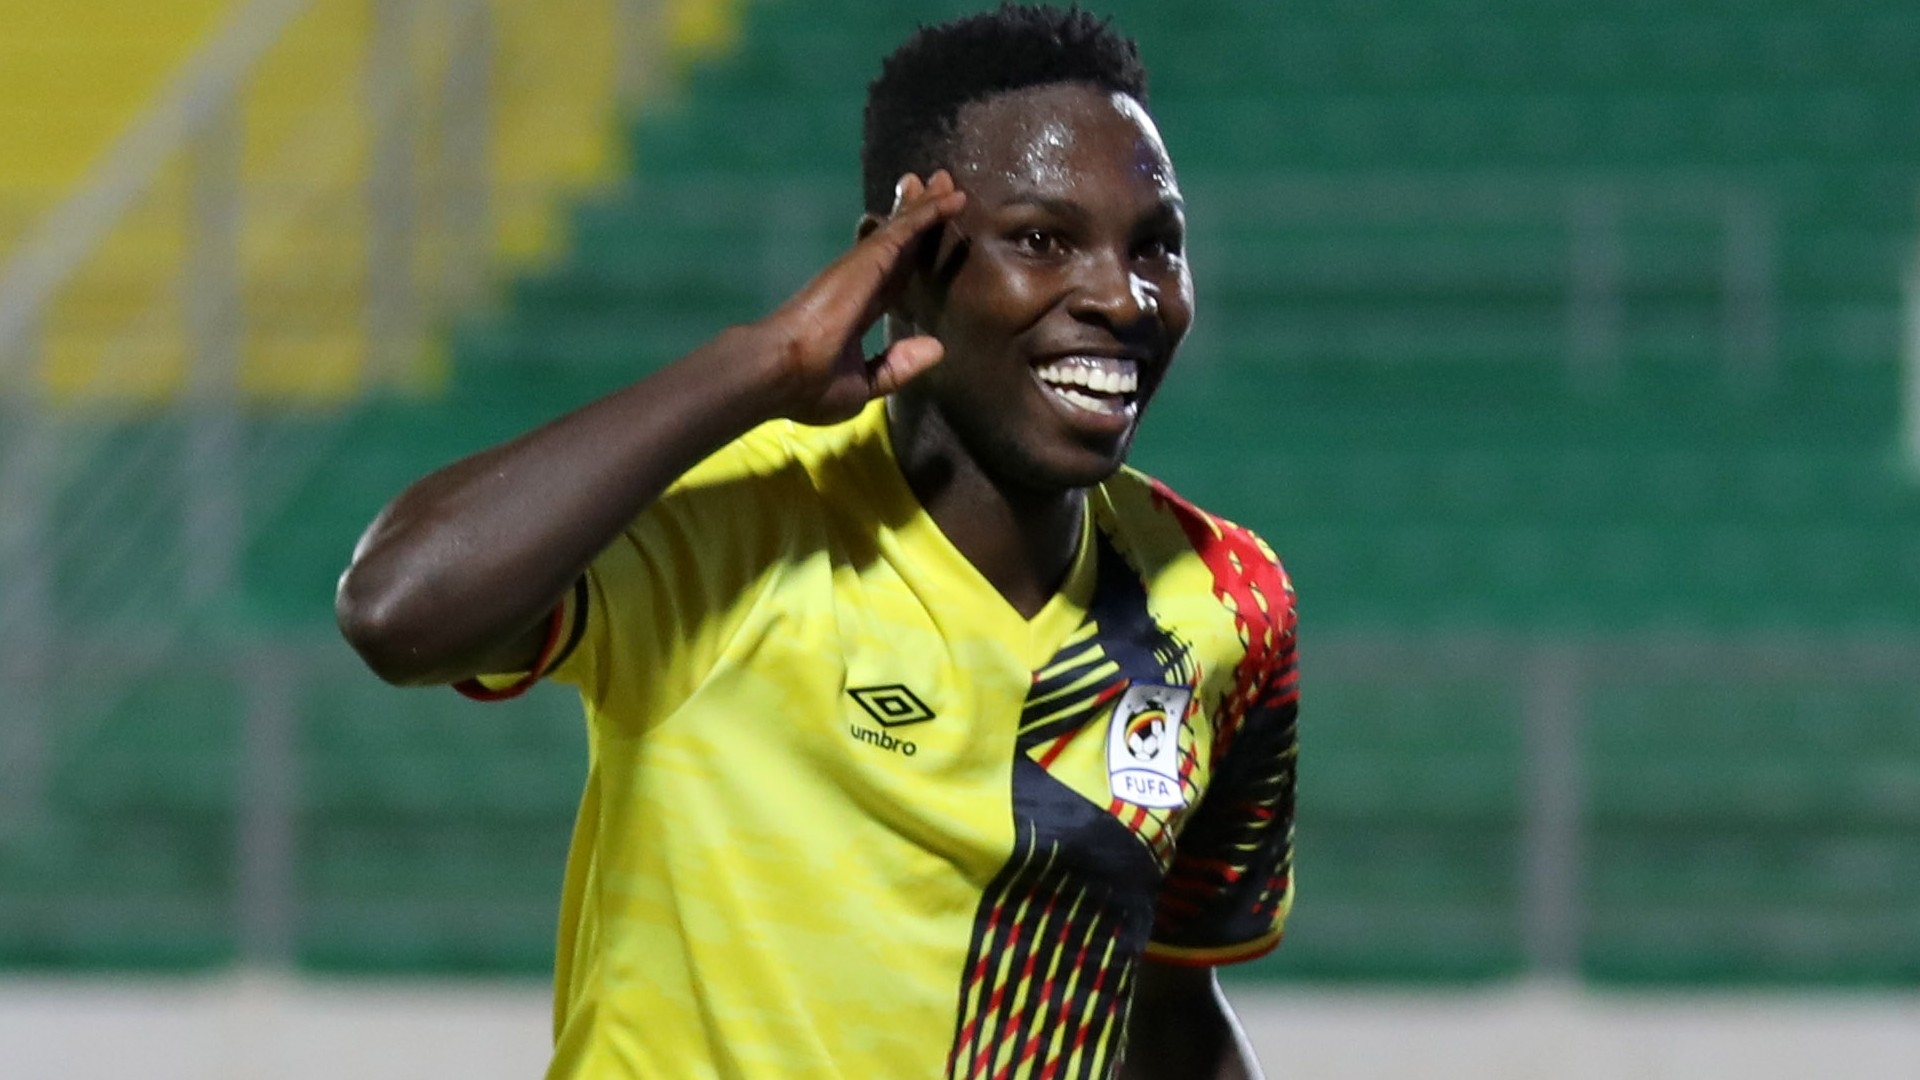 Police FC striker Kakooza hunted by clubs who will make Uganda proud -  Agent | Goal.com Ghana